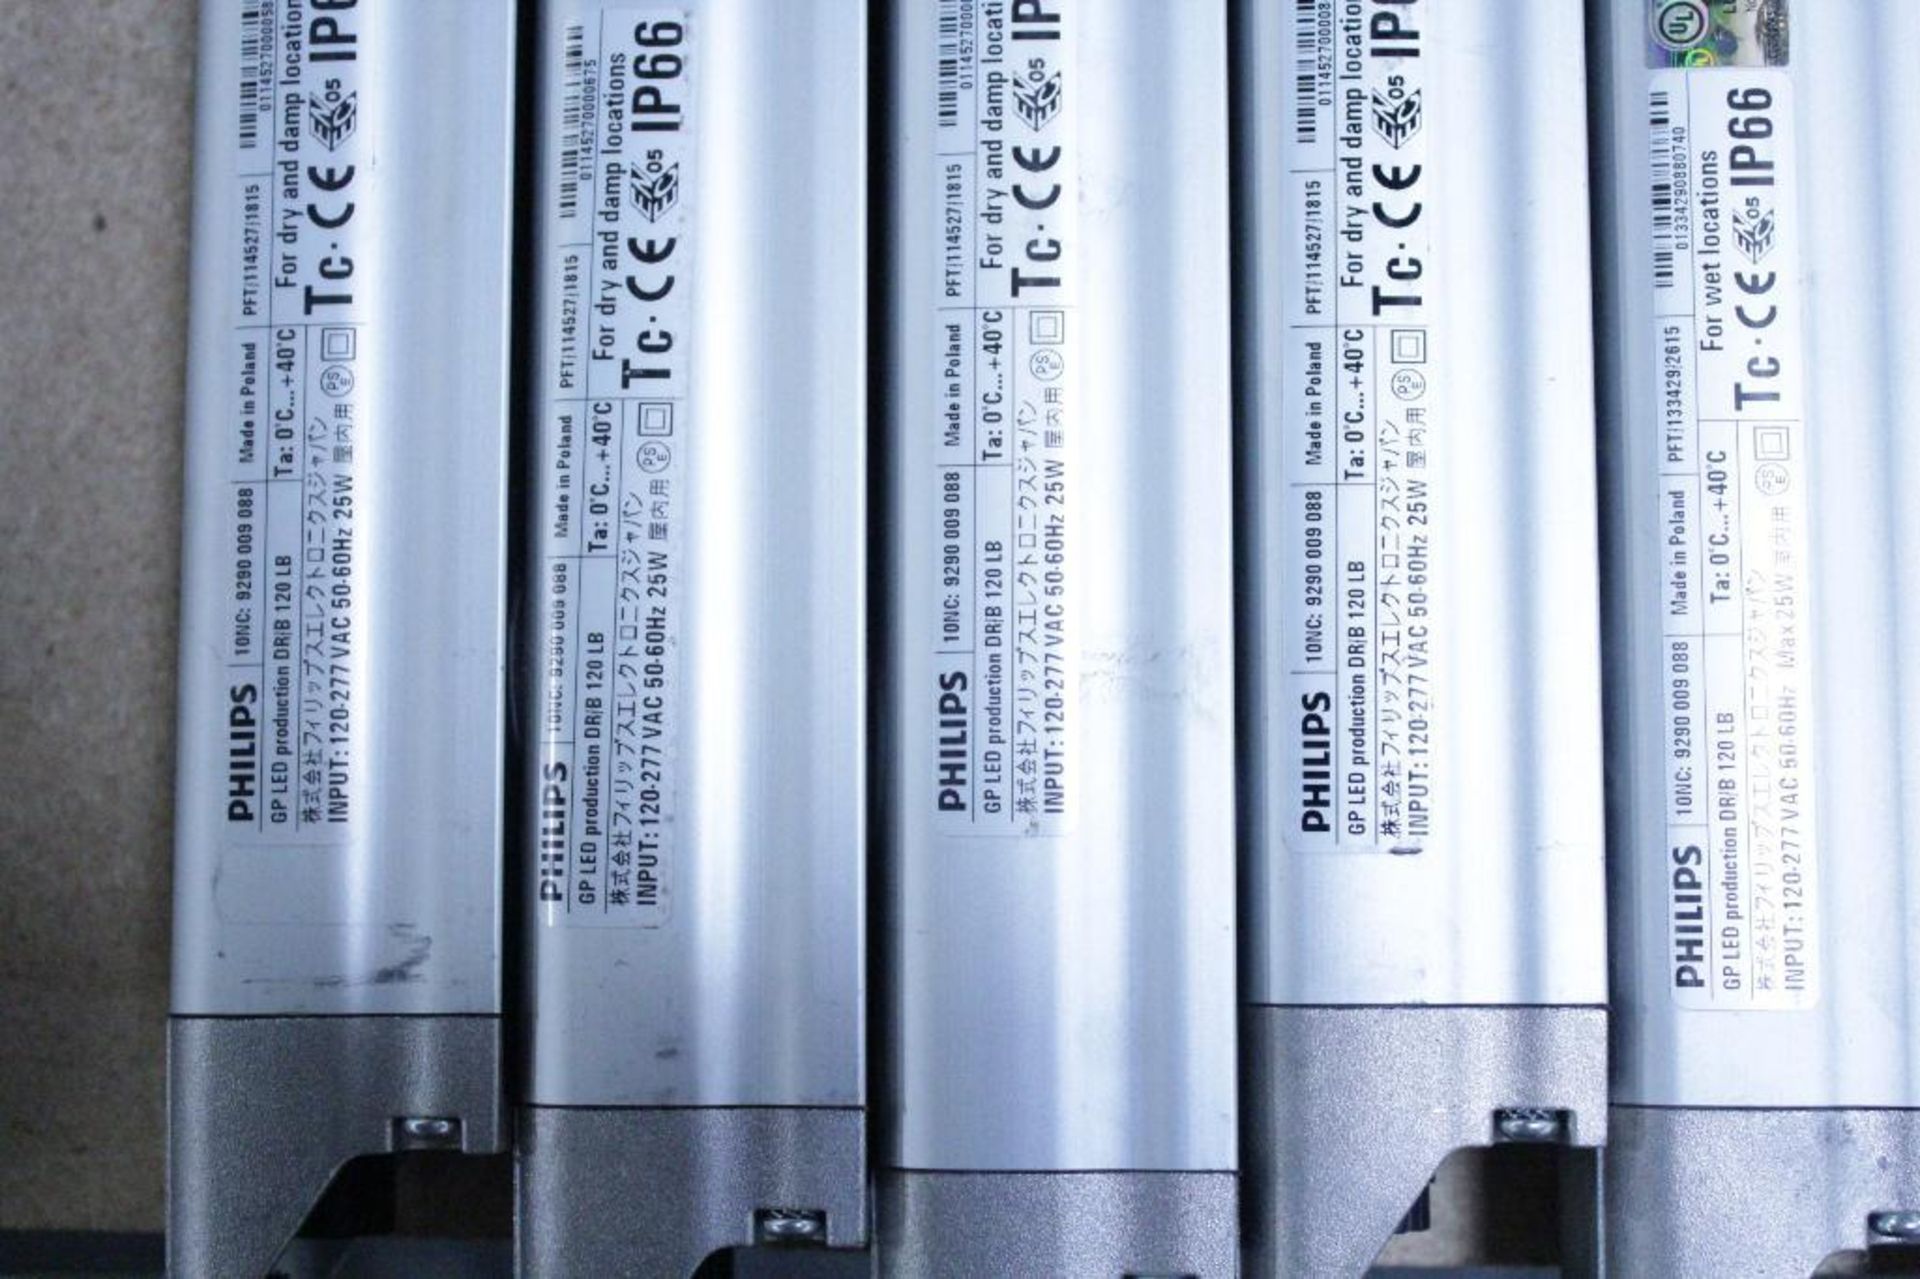 5 Philips GP LED Production bar lights DR/B 120LB - Image 2 of 5